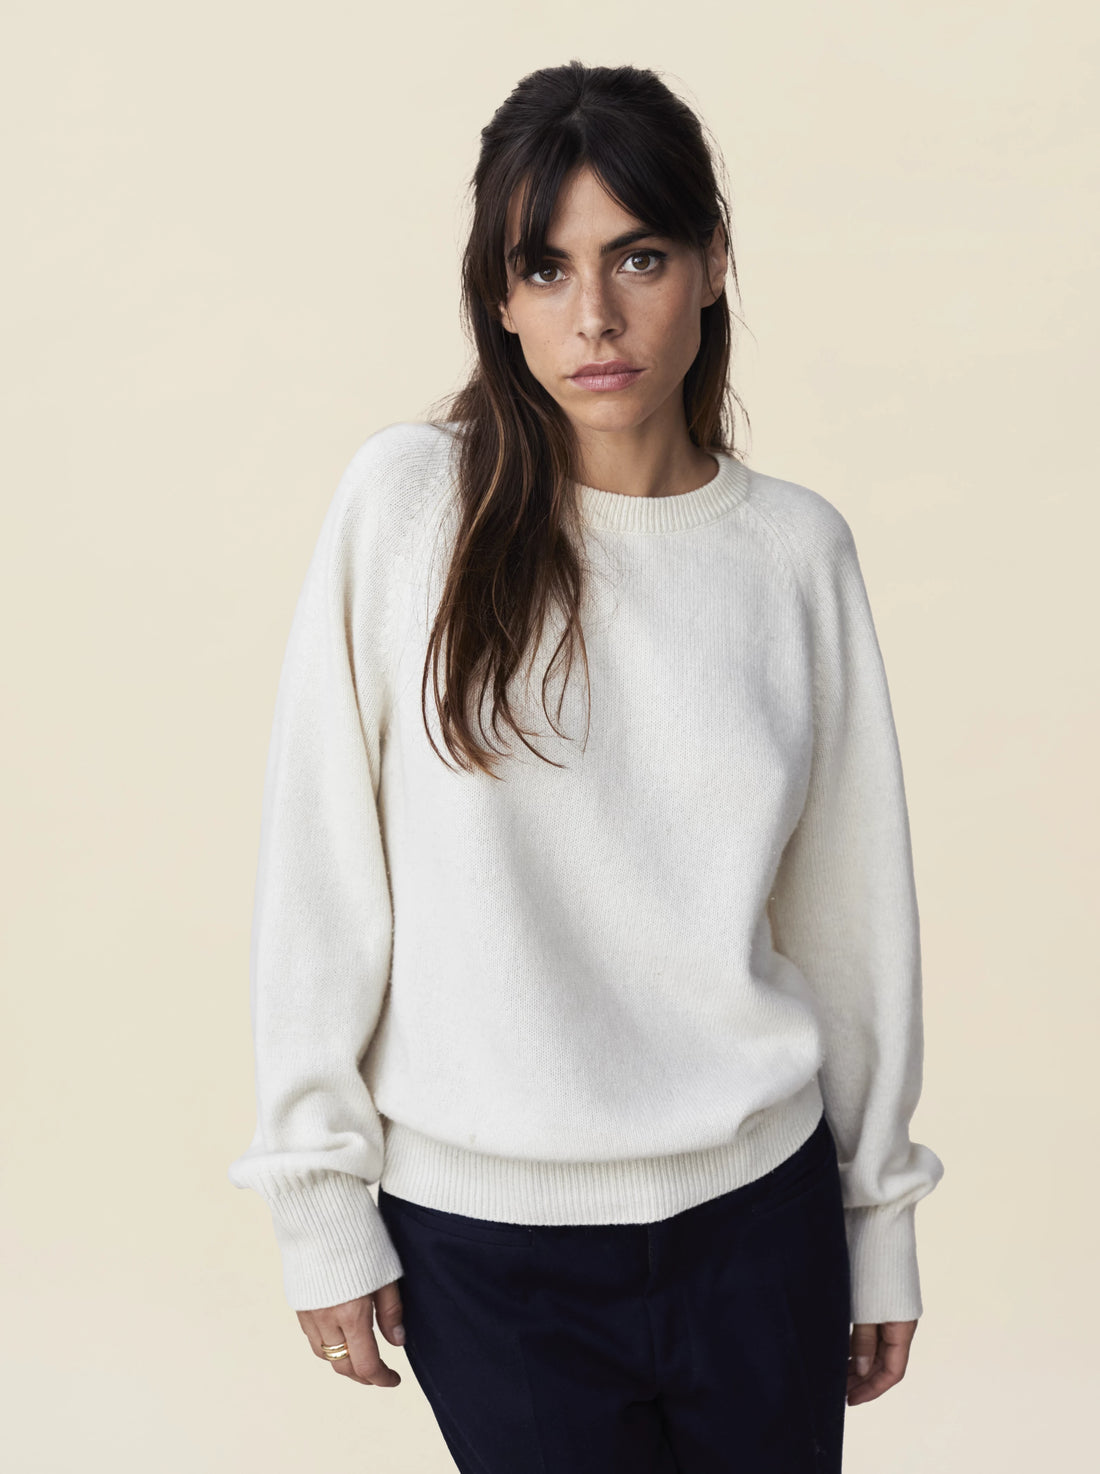  Women's crewneck cashmere sweater in White